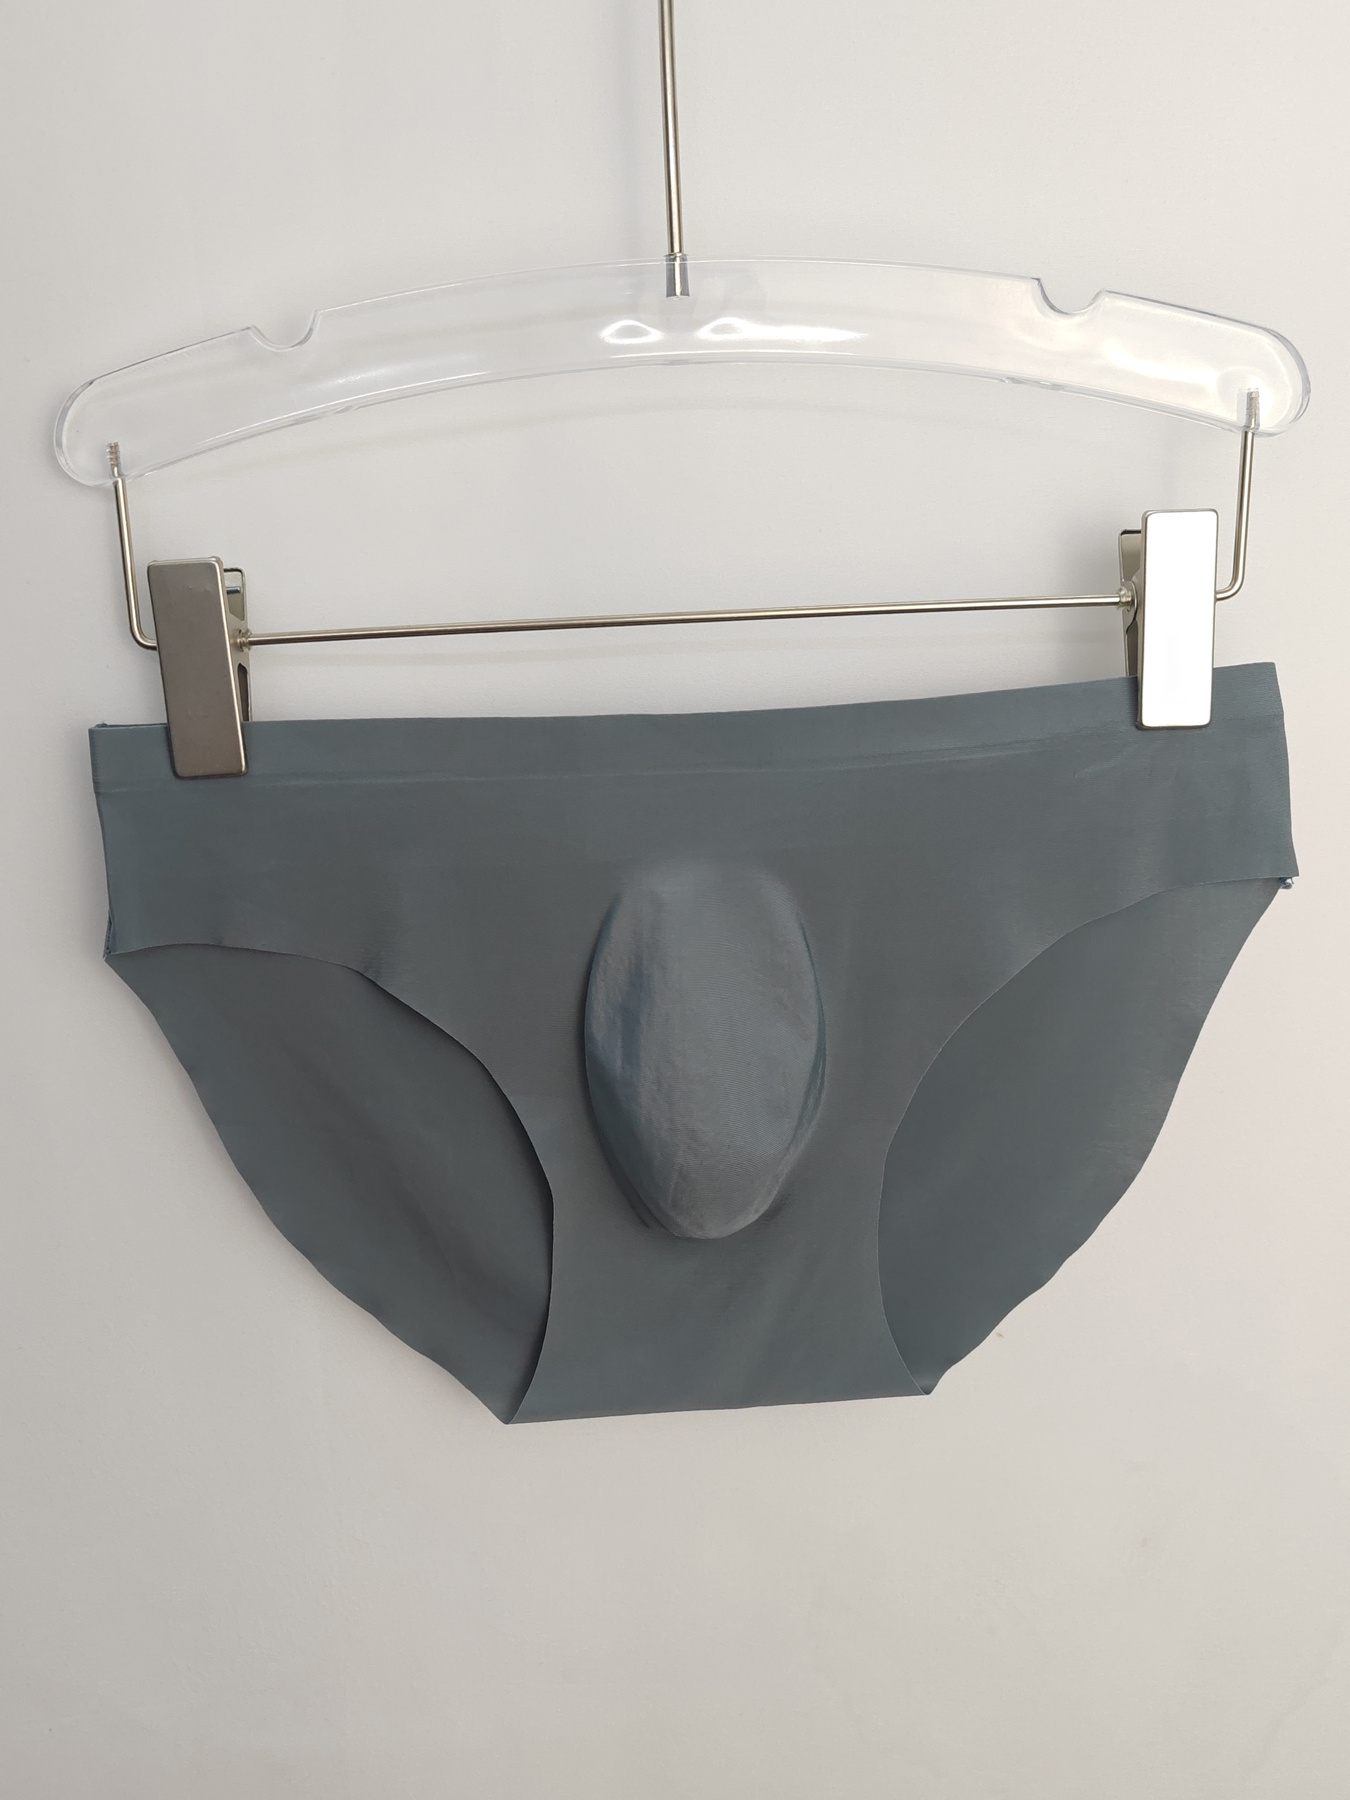 Men Bulge Pouch Seamless Ice Silk Thin Briefs Underpants Underwear Panties  (grey)